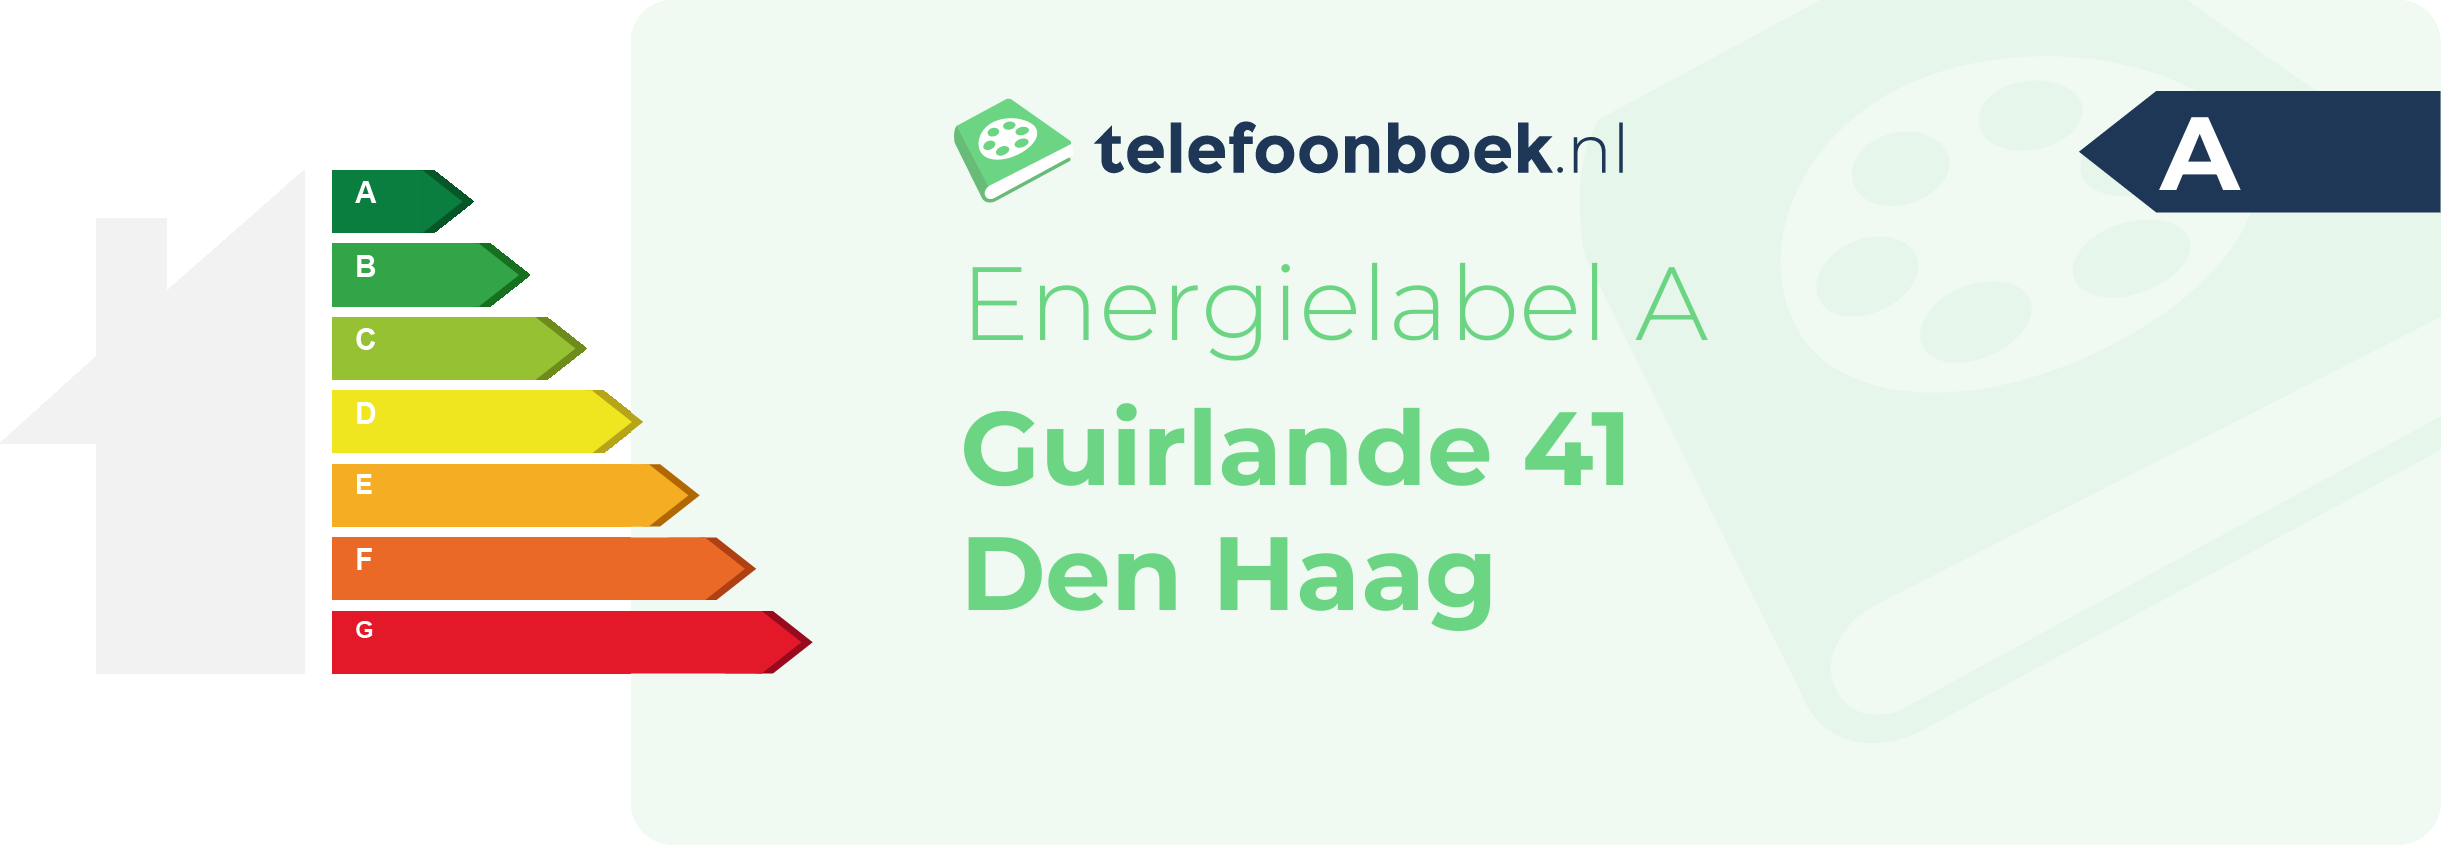 Energielabel Guirlande 41 Den Haag